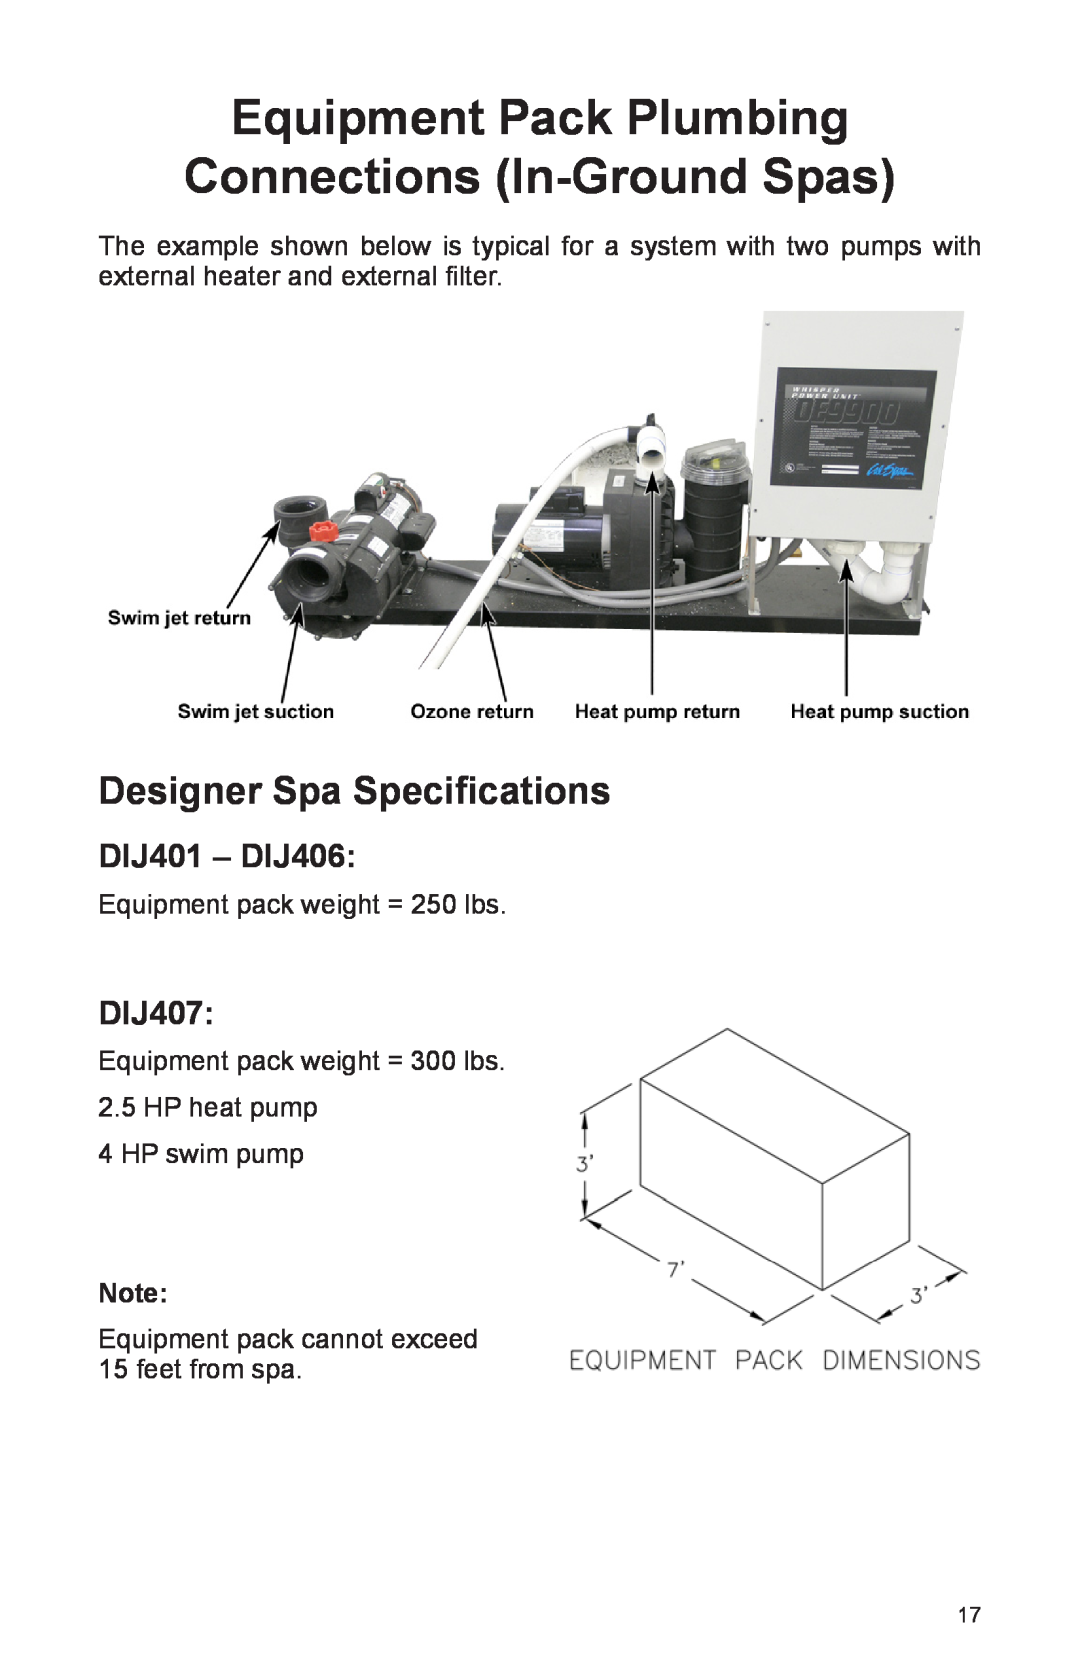 Cal Spas A857L Equipment Pack Plumbing Connections In-GroundSpas, Designer Spa Specifications, DIJ401 – DIJ406, DIJ407 